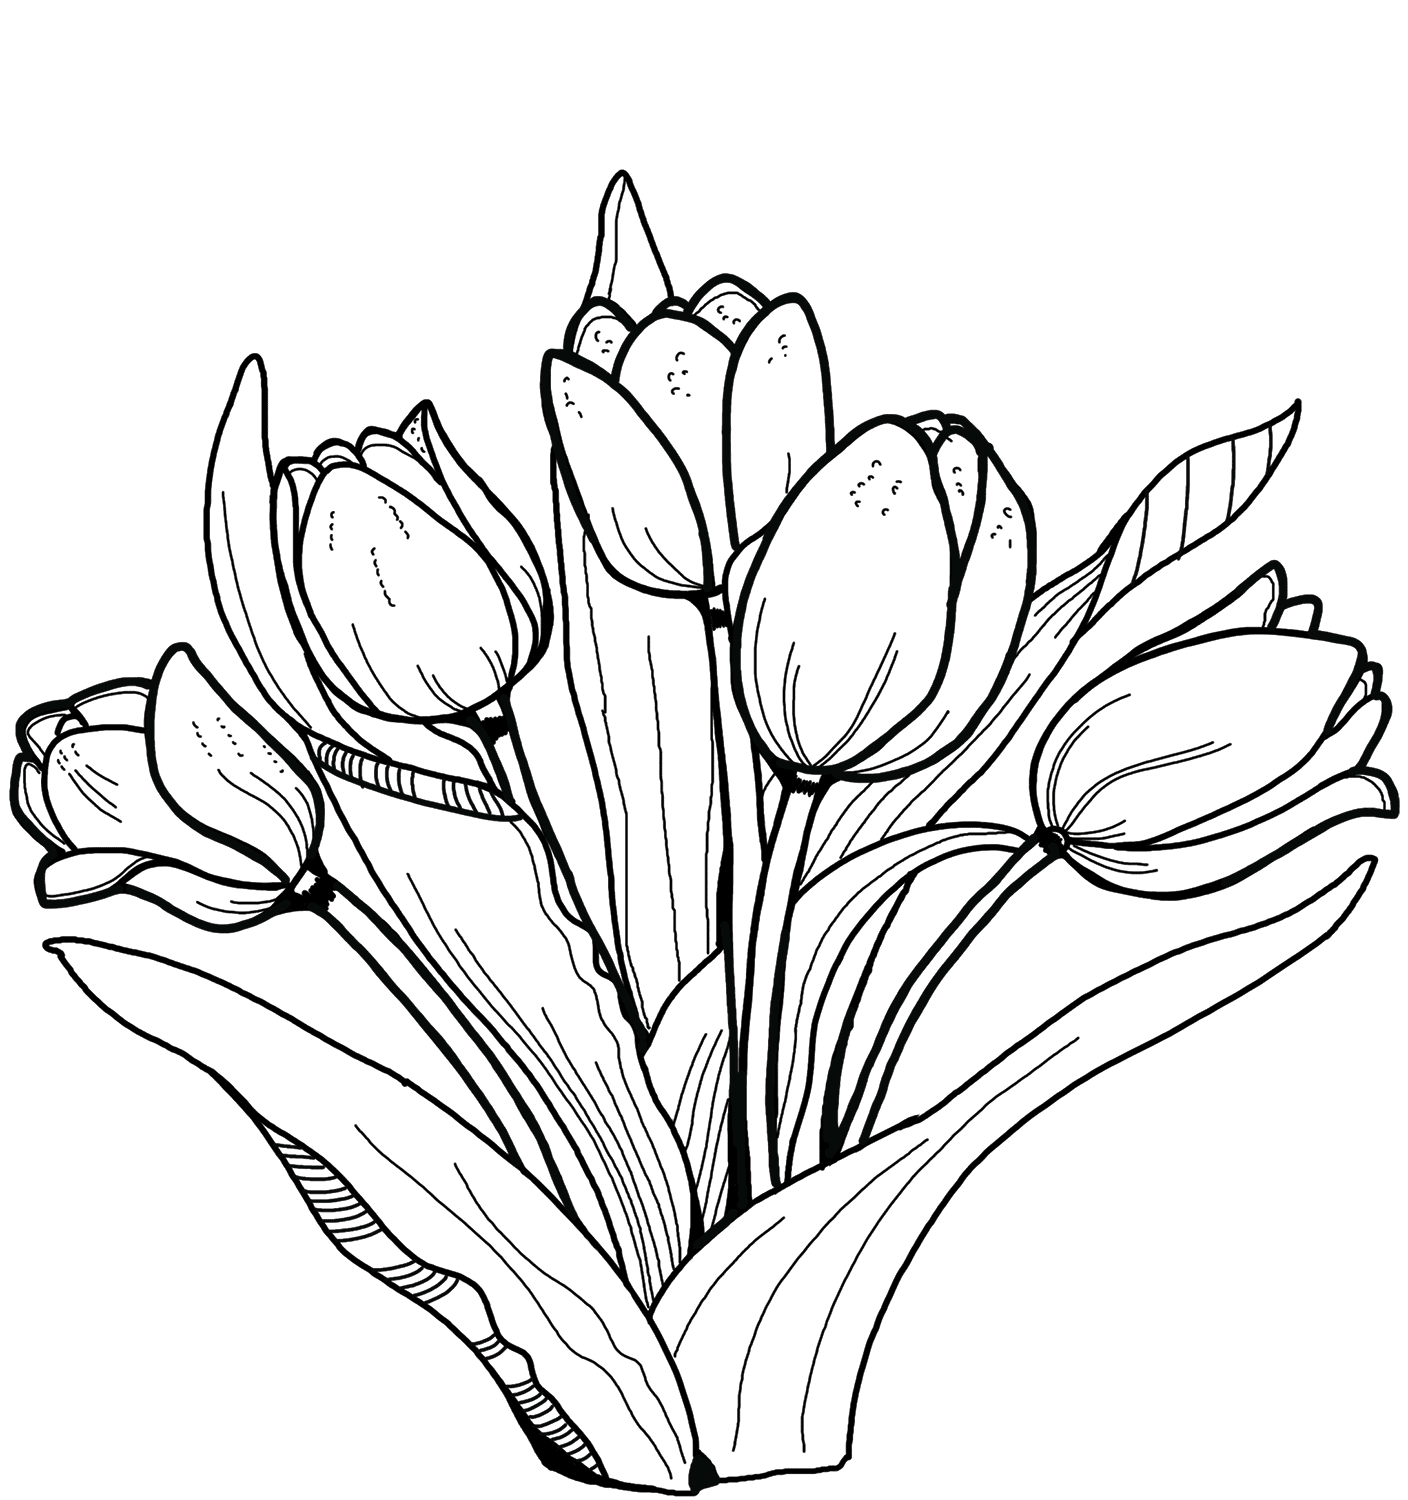 Coloriage Tulipes Beaucoup de tulipes